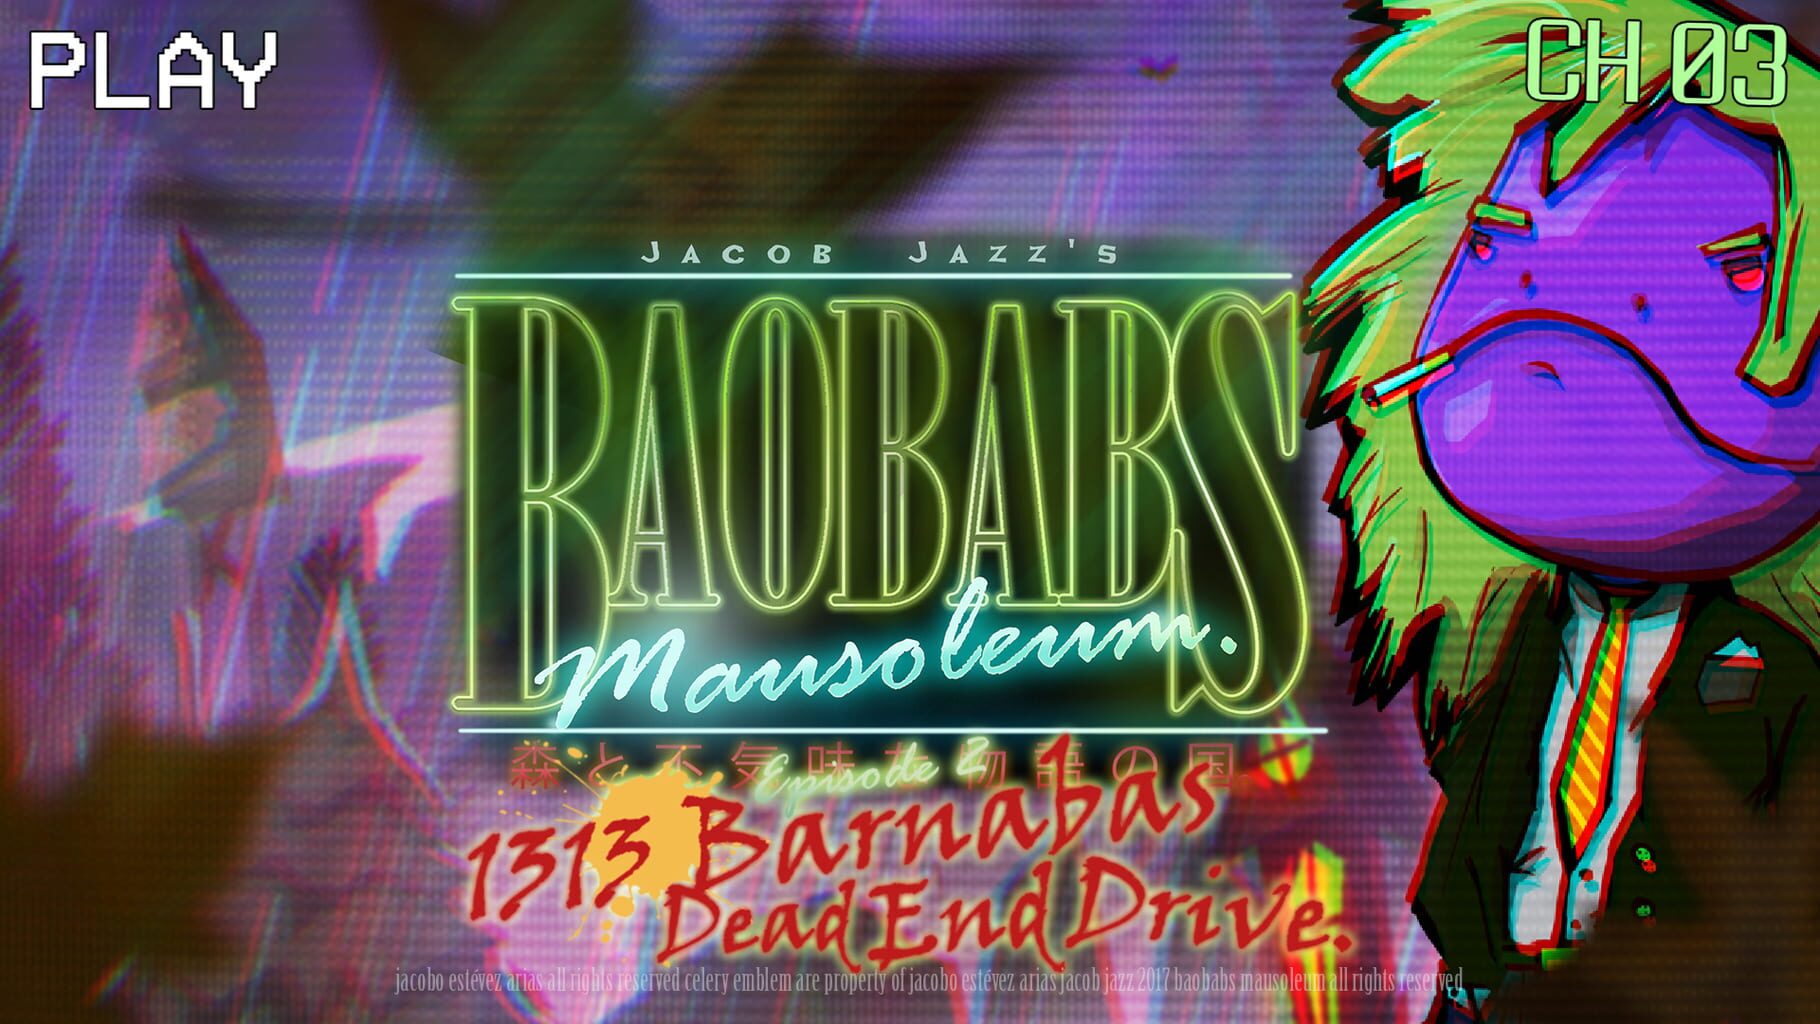 Baobabs Mausoleum Ep. 2 1313 Barnabas Dead End Drive artwork